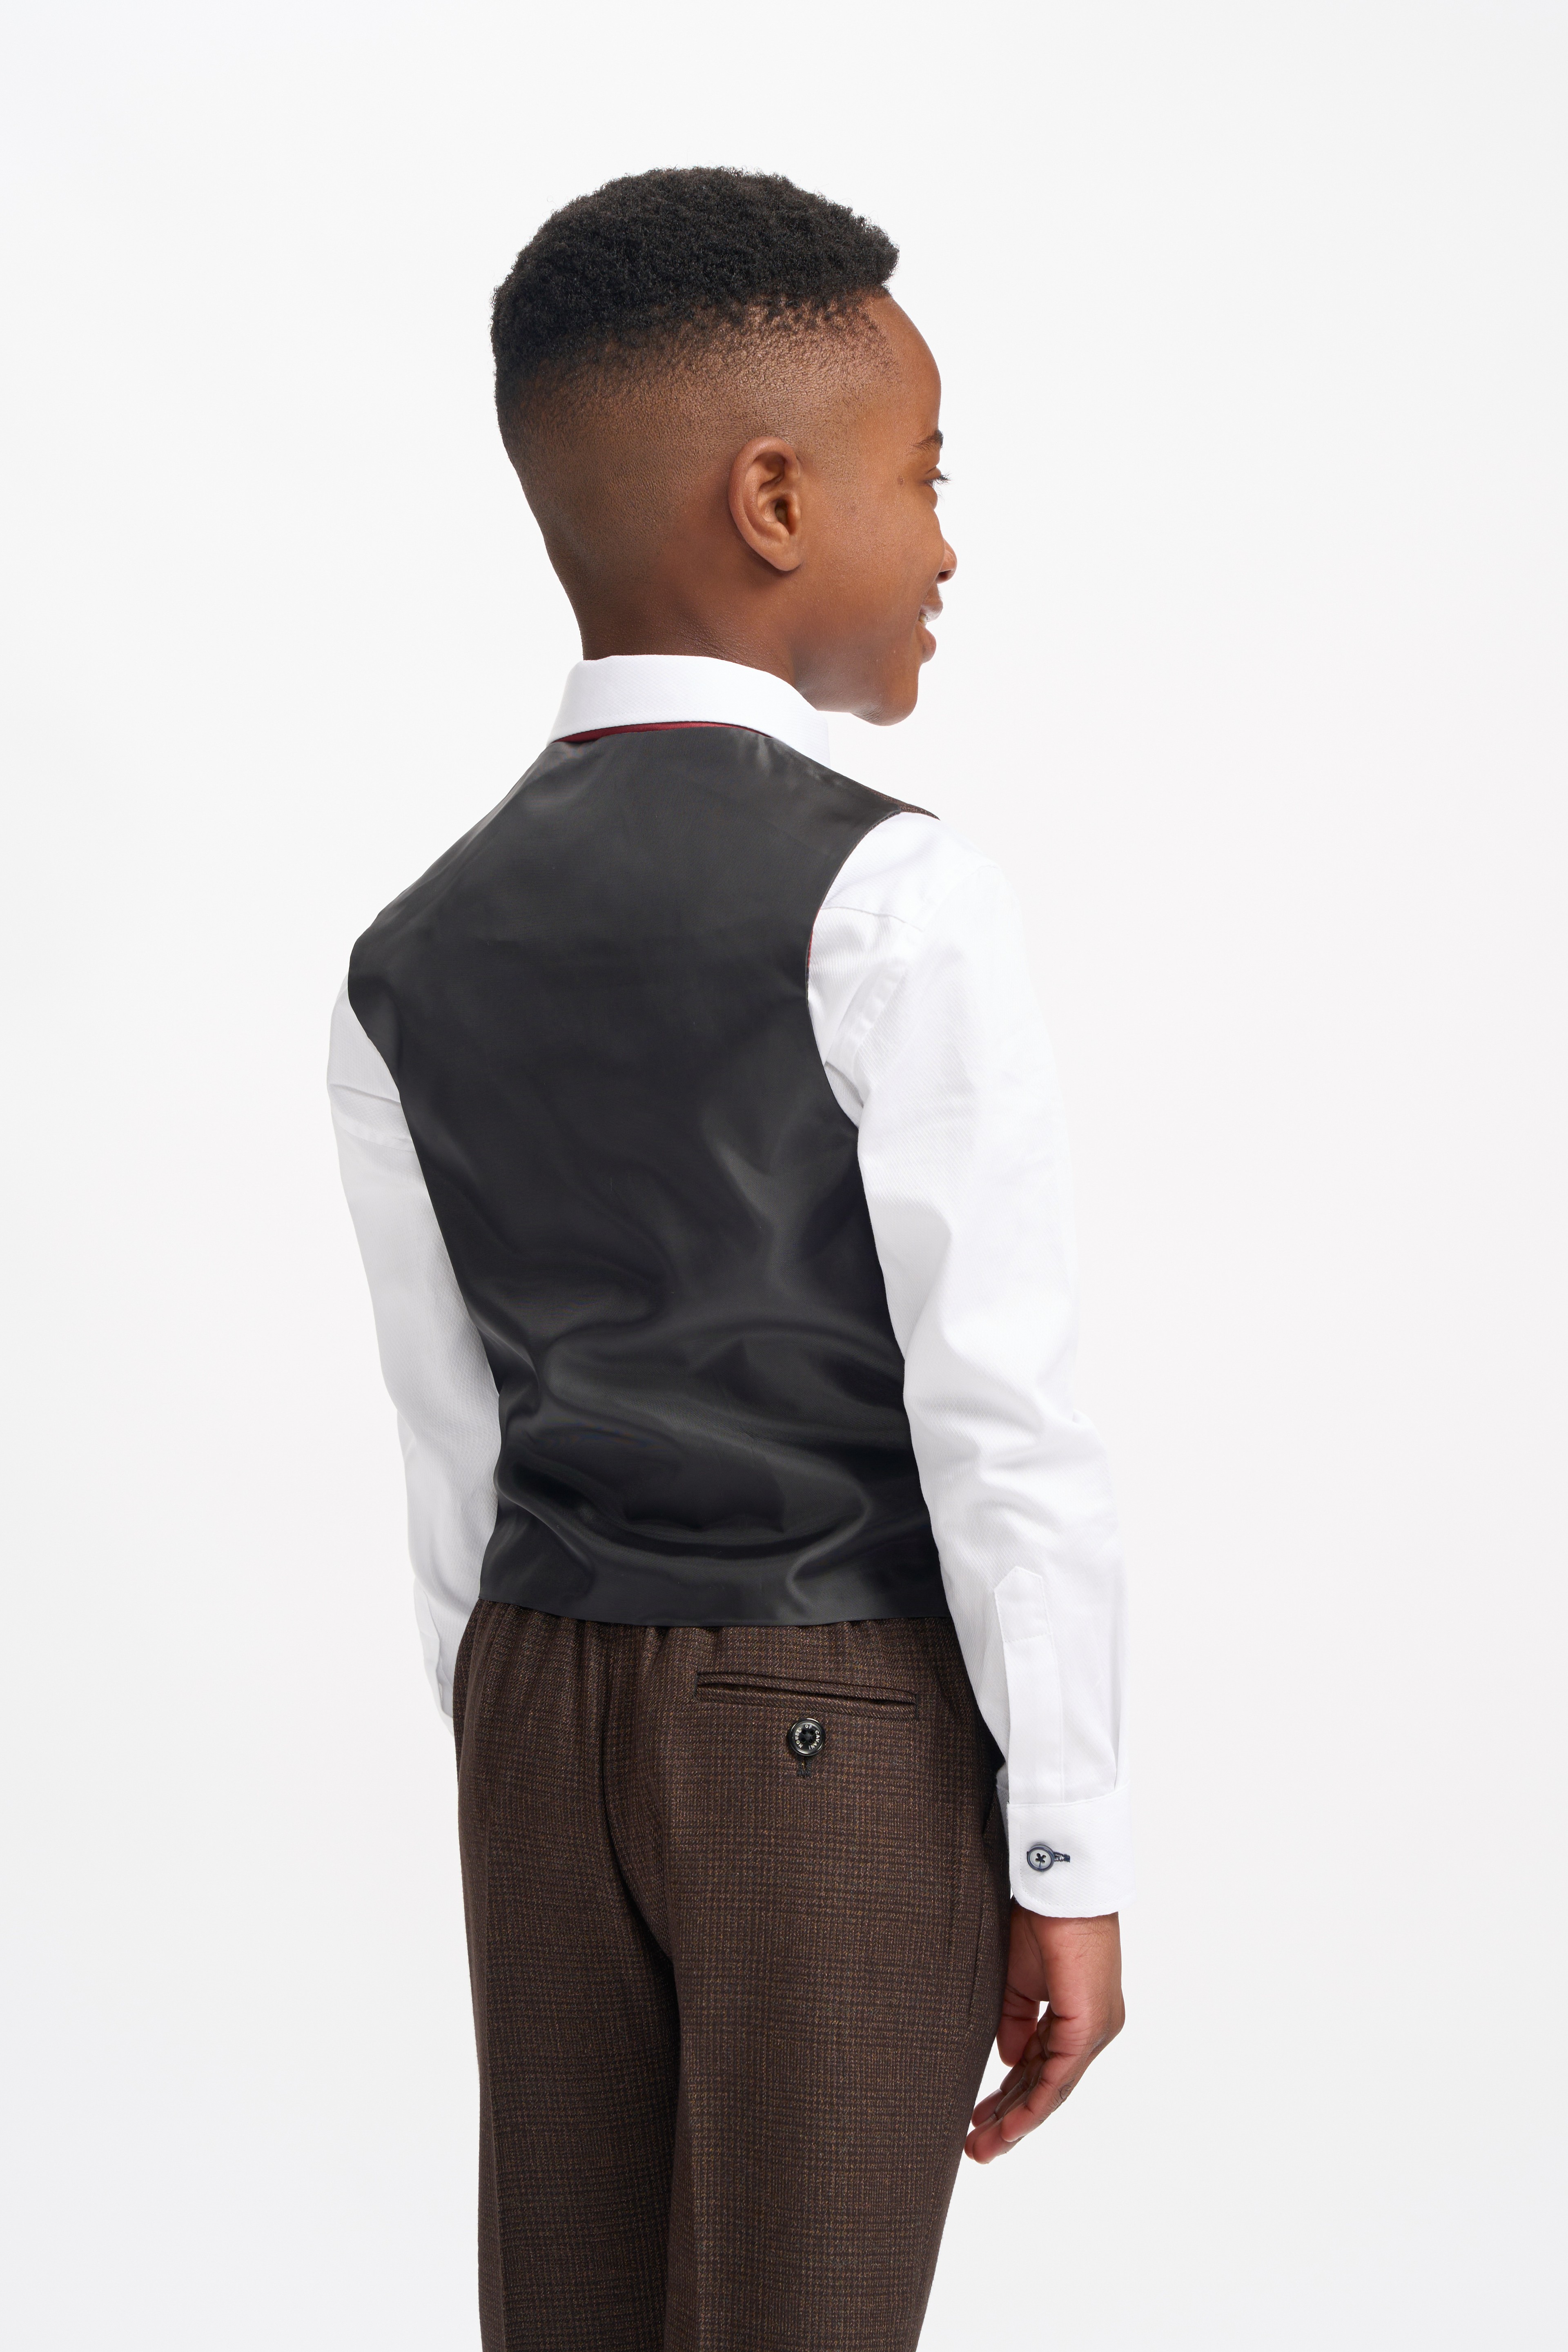 Boys Slim Fit Tweed Check Suit - CARIDI  - Brown